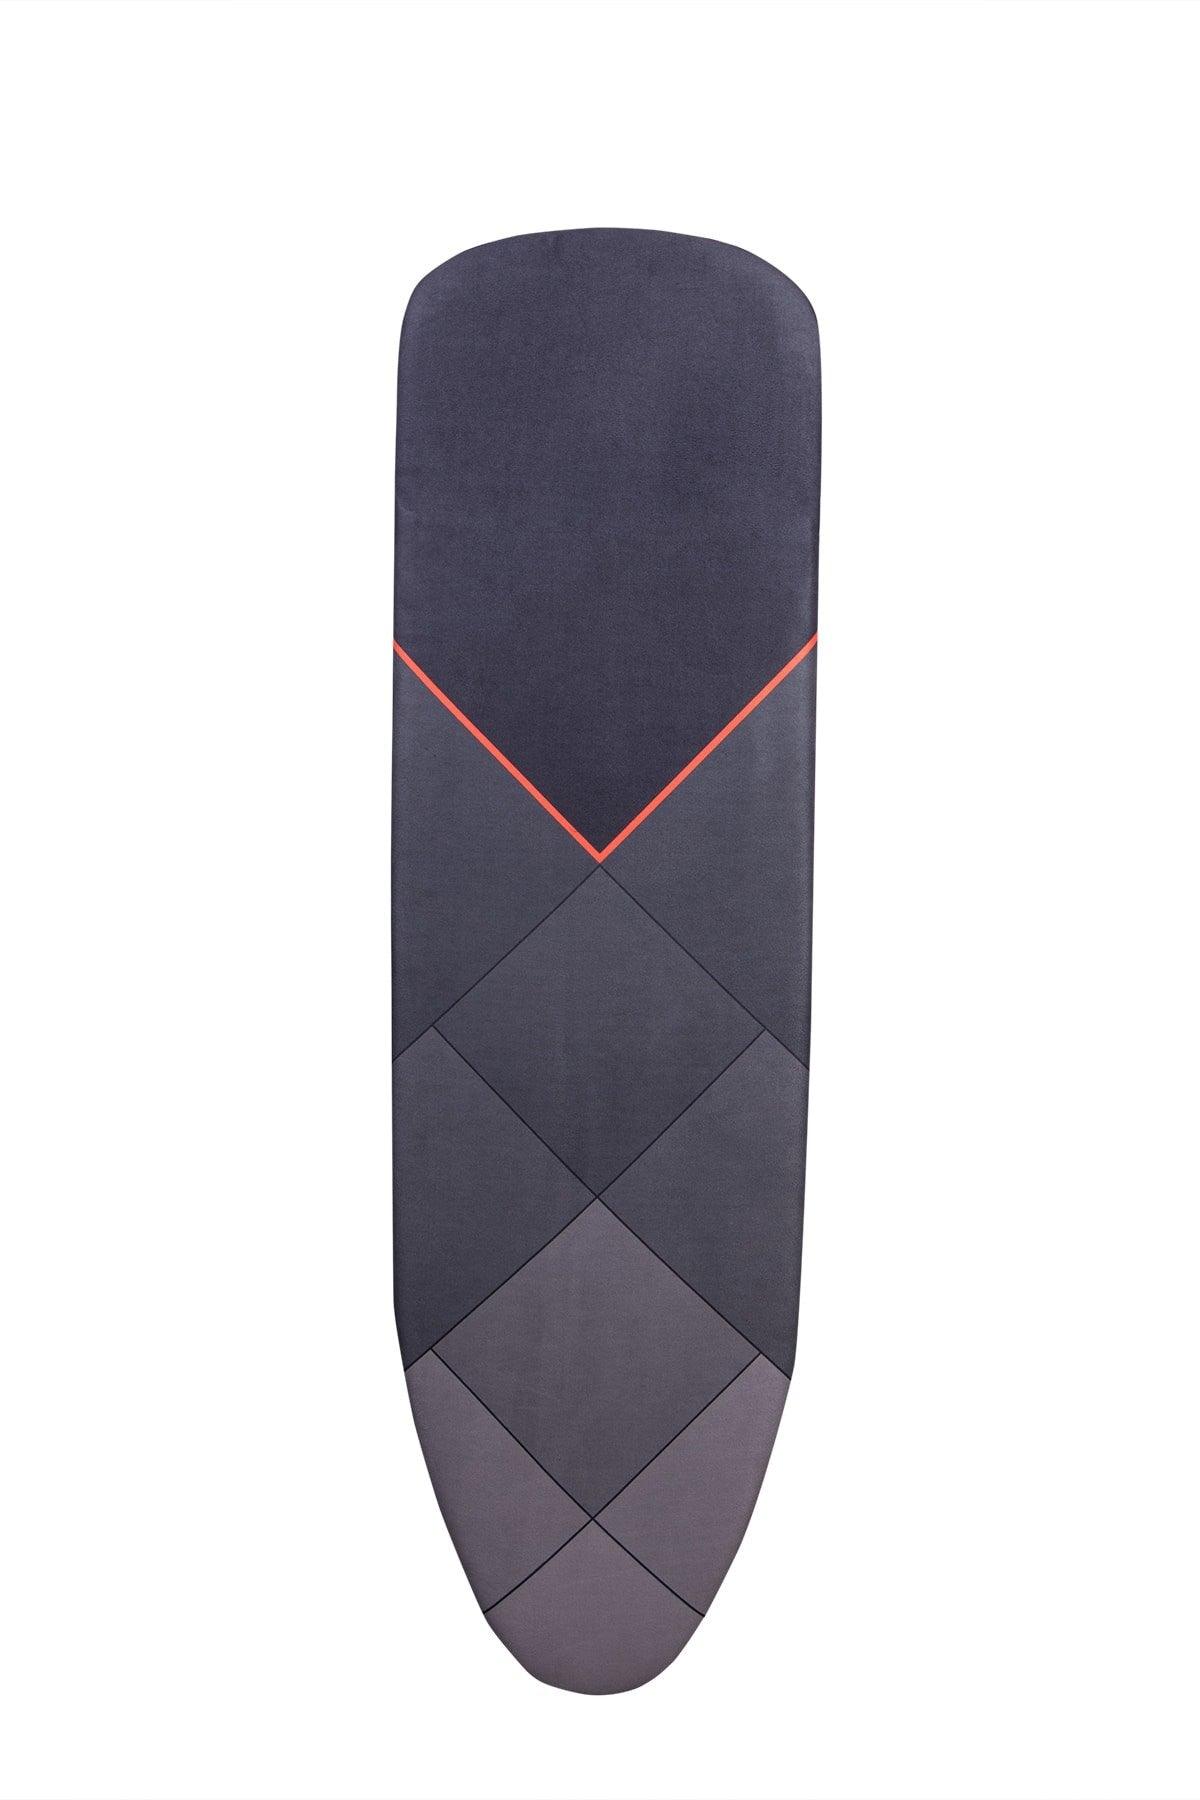 Harbinger Mm003 Custom Felt Heat Resistant Ironing Board Cloth Cover - Swordslife